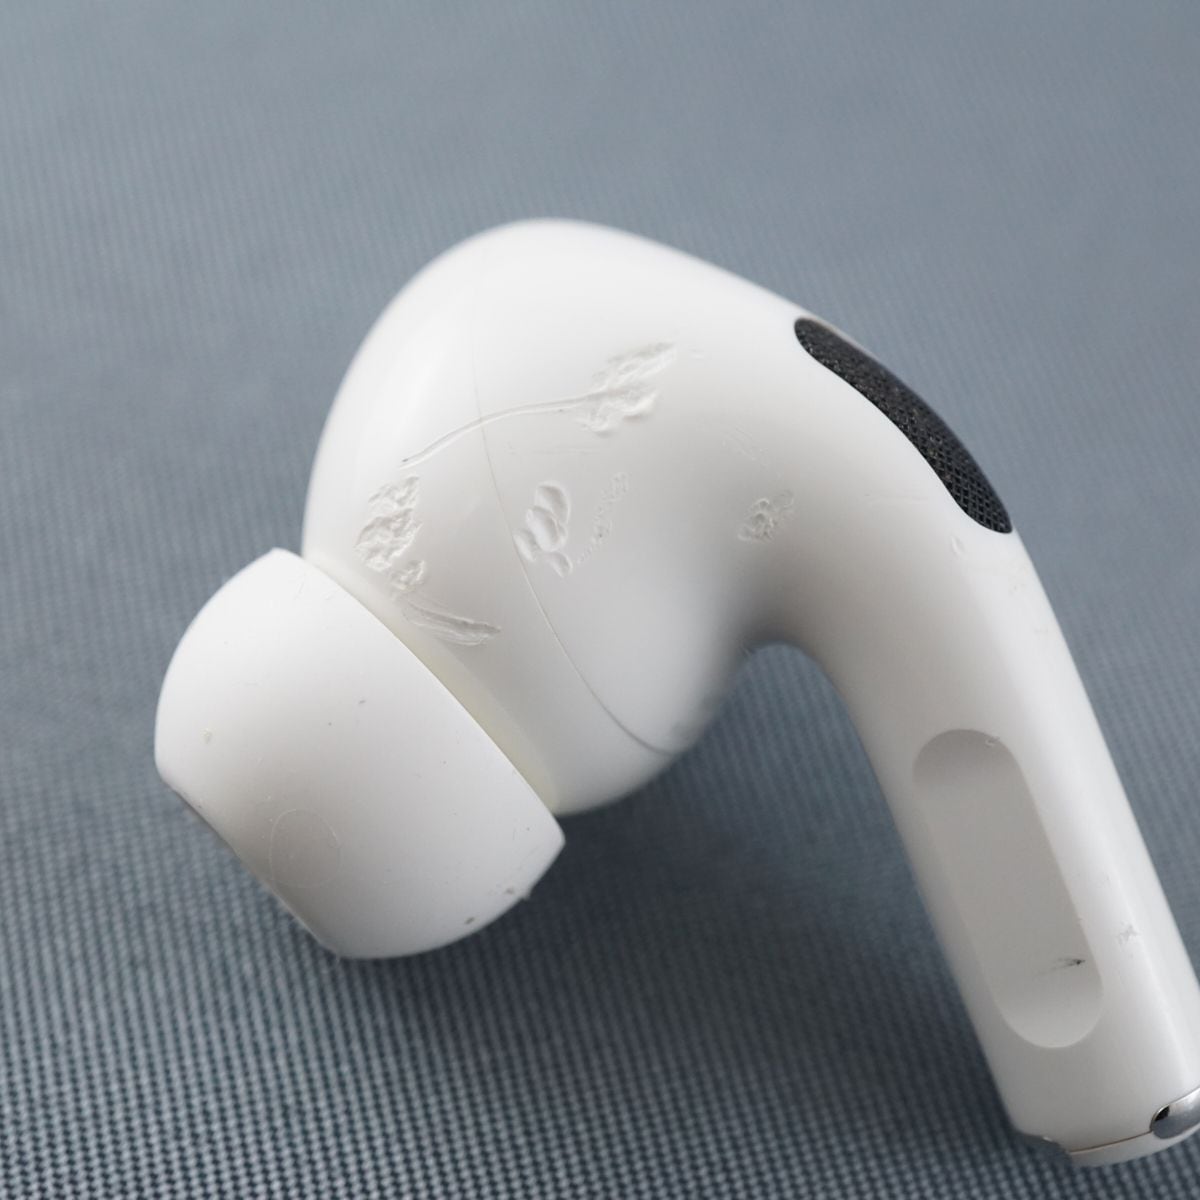 Apple AirPods Pro エアーポッズ プロ 左イヤホンのみ USED品 第一世代 L 片耳 左耳 A2084 MWP22J/A 完動品  中古 V9053